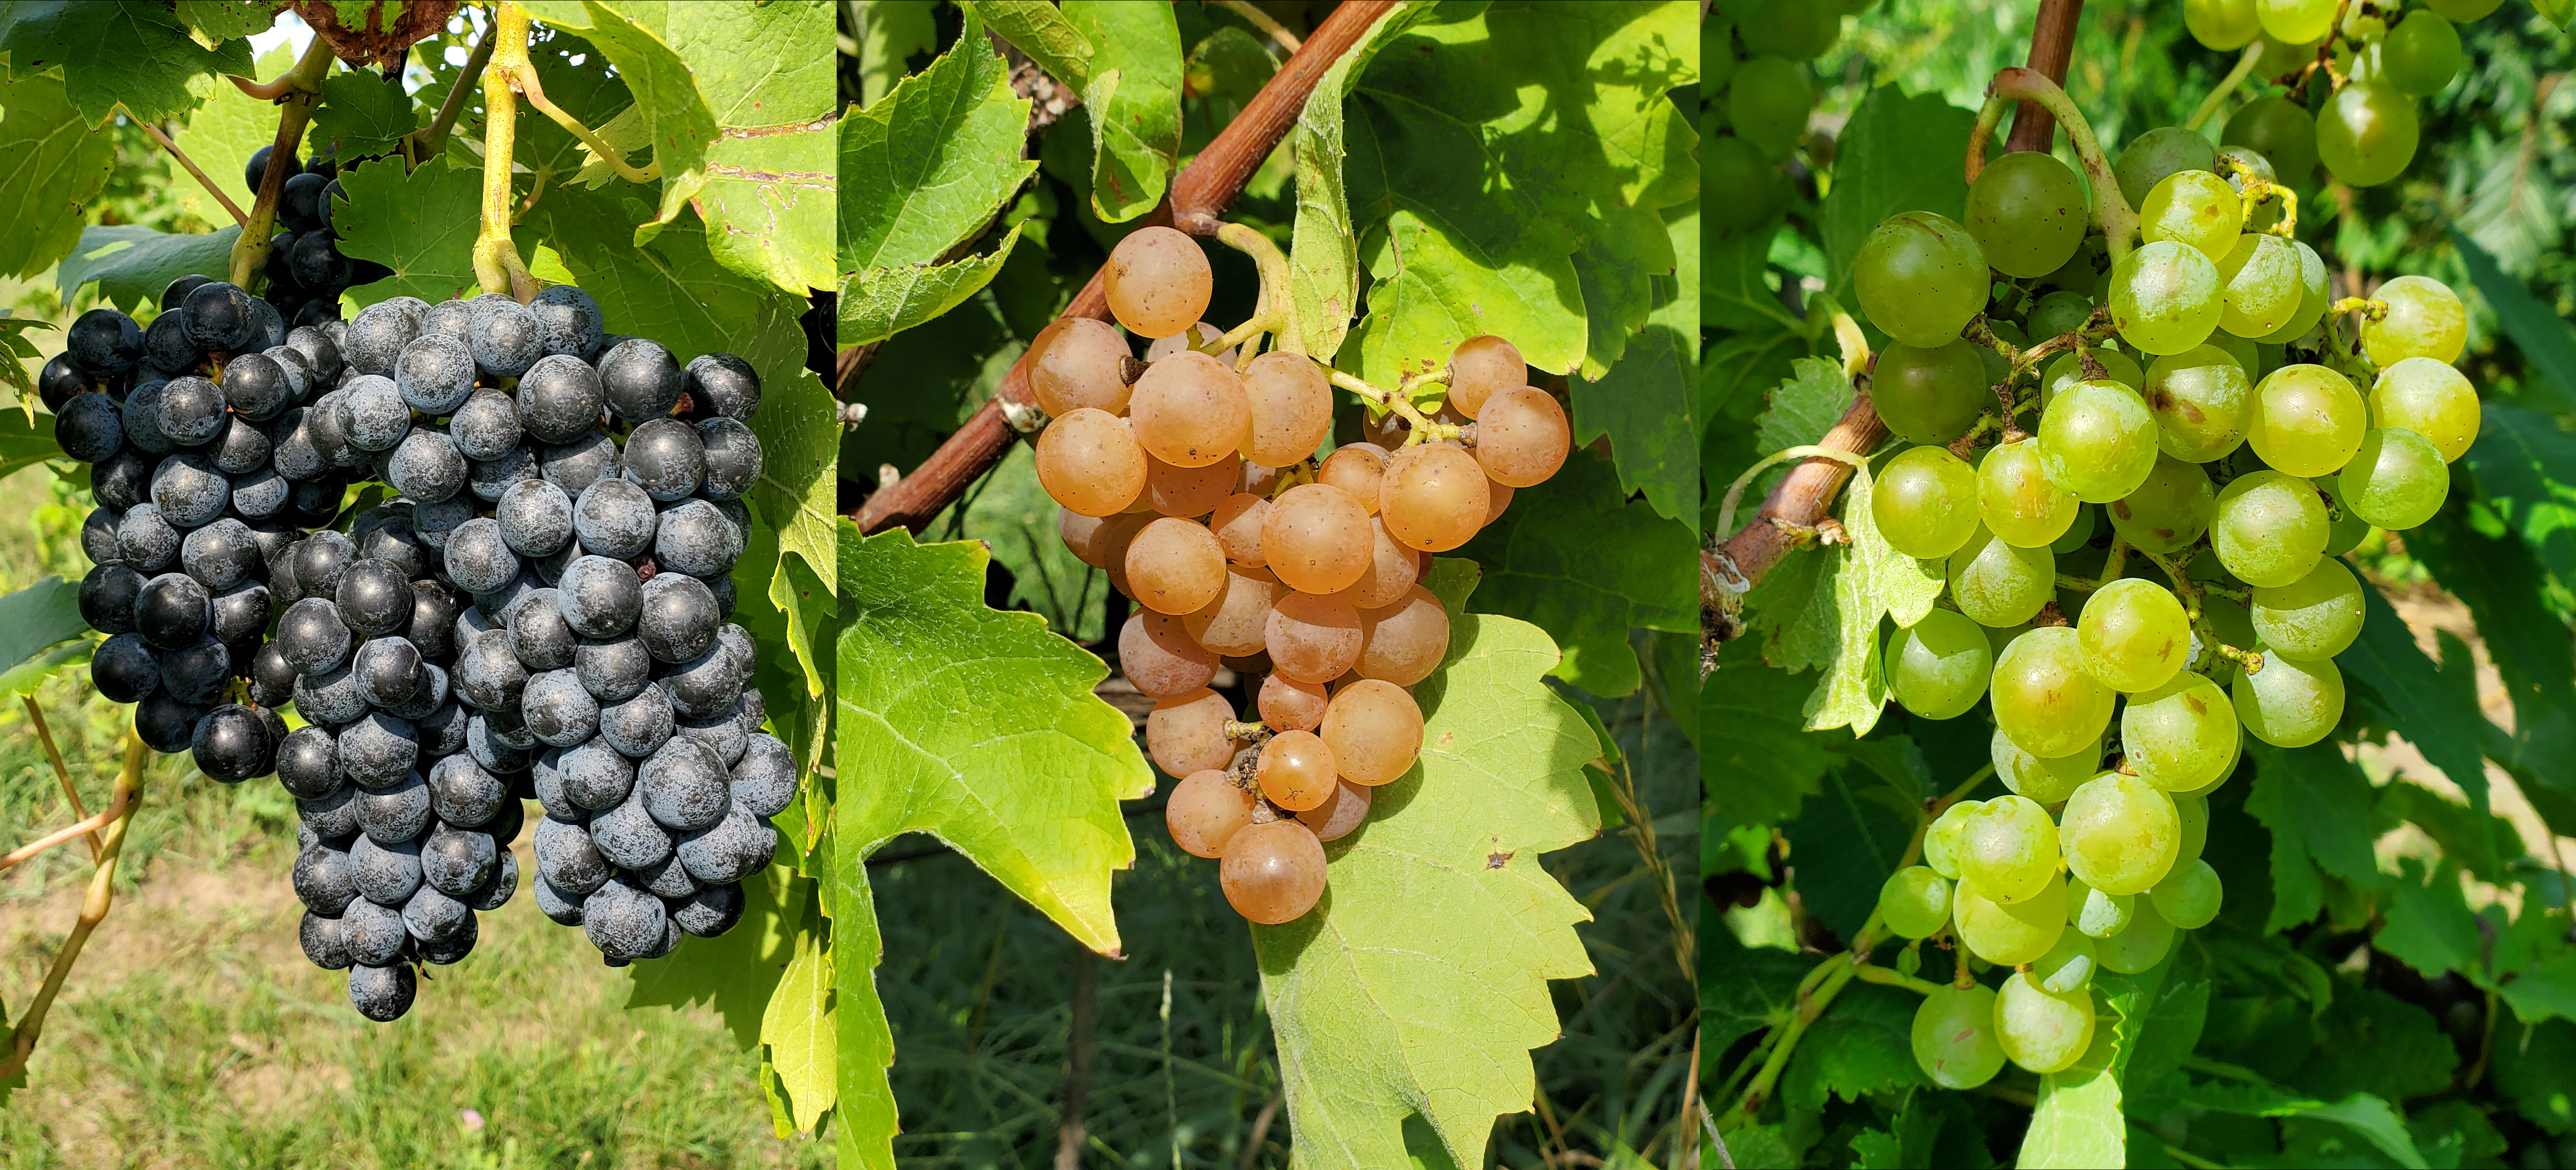 Grape cultivars